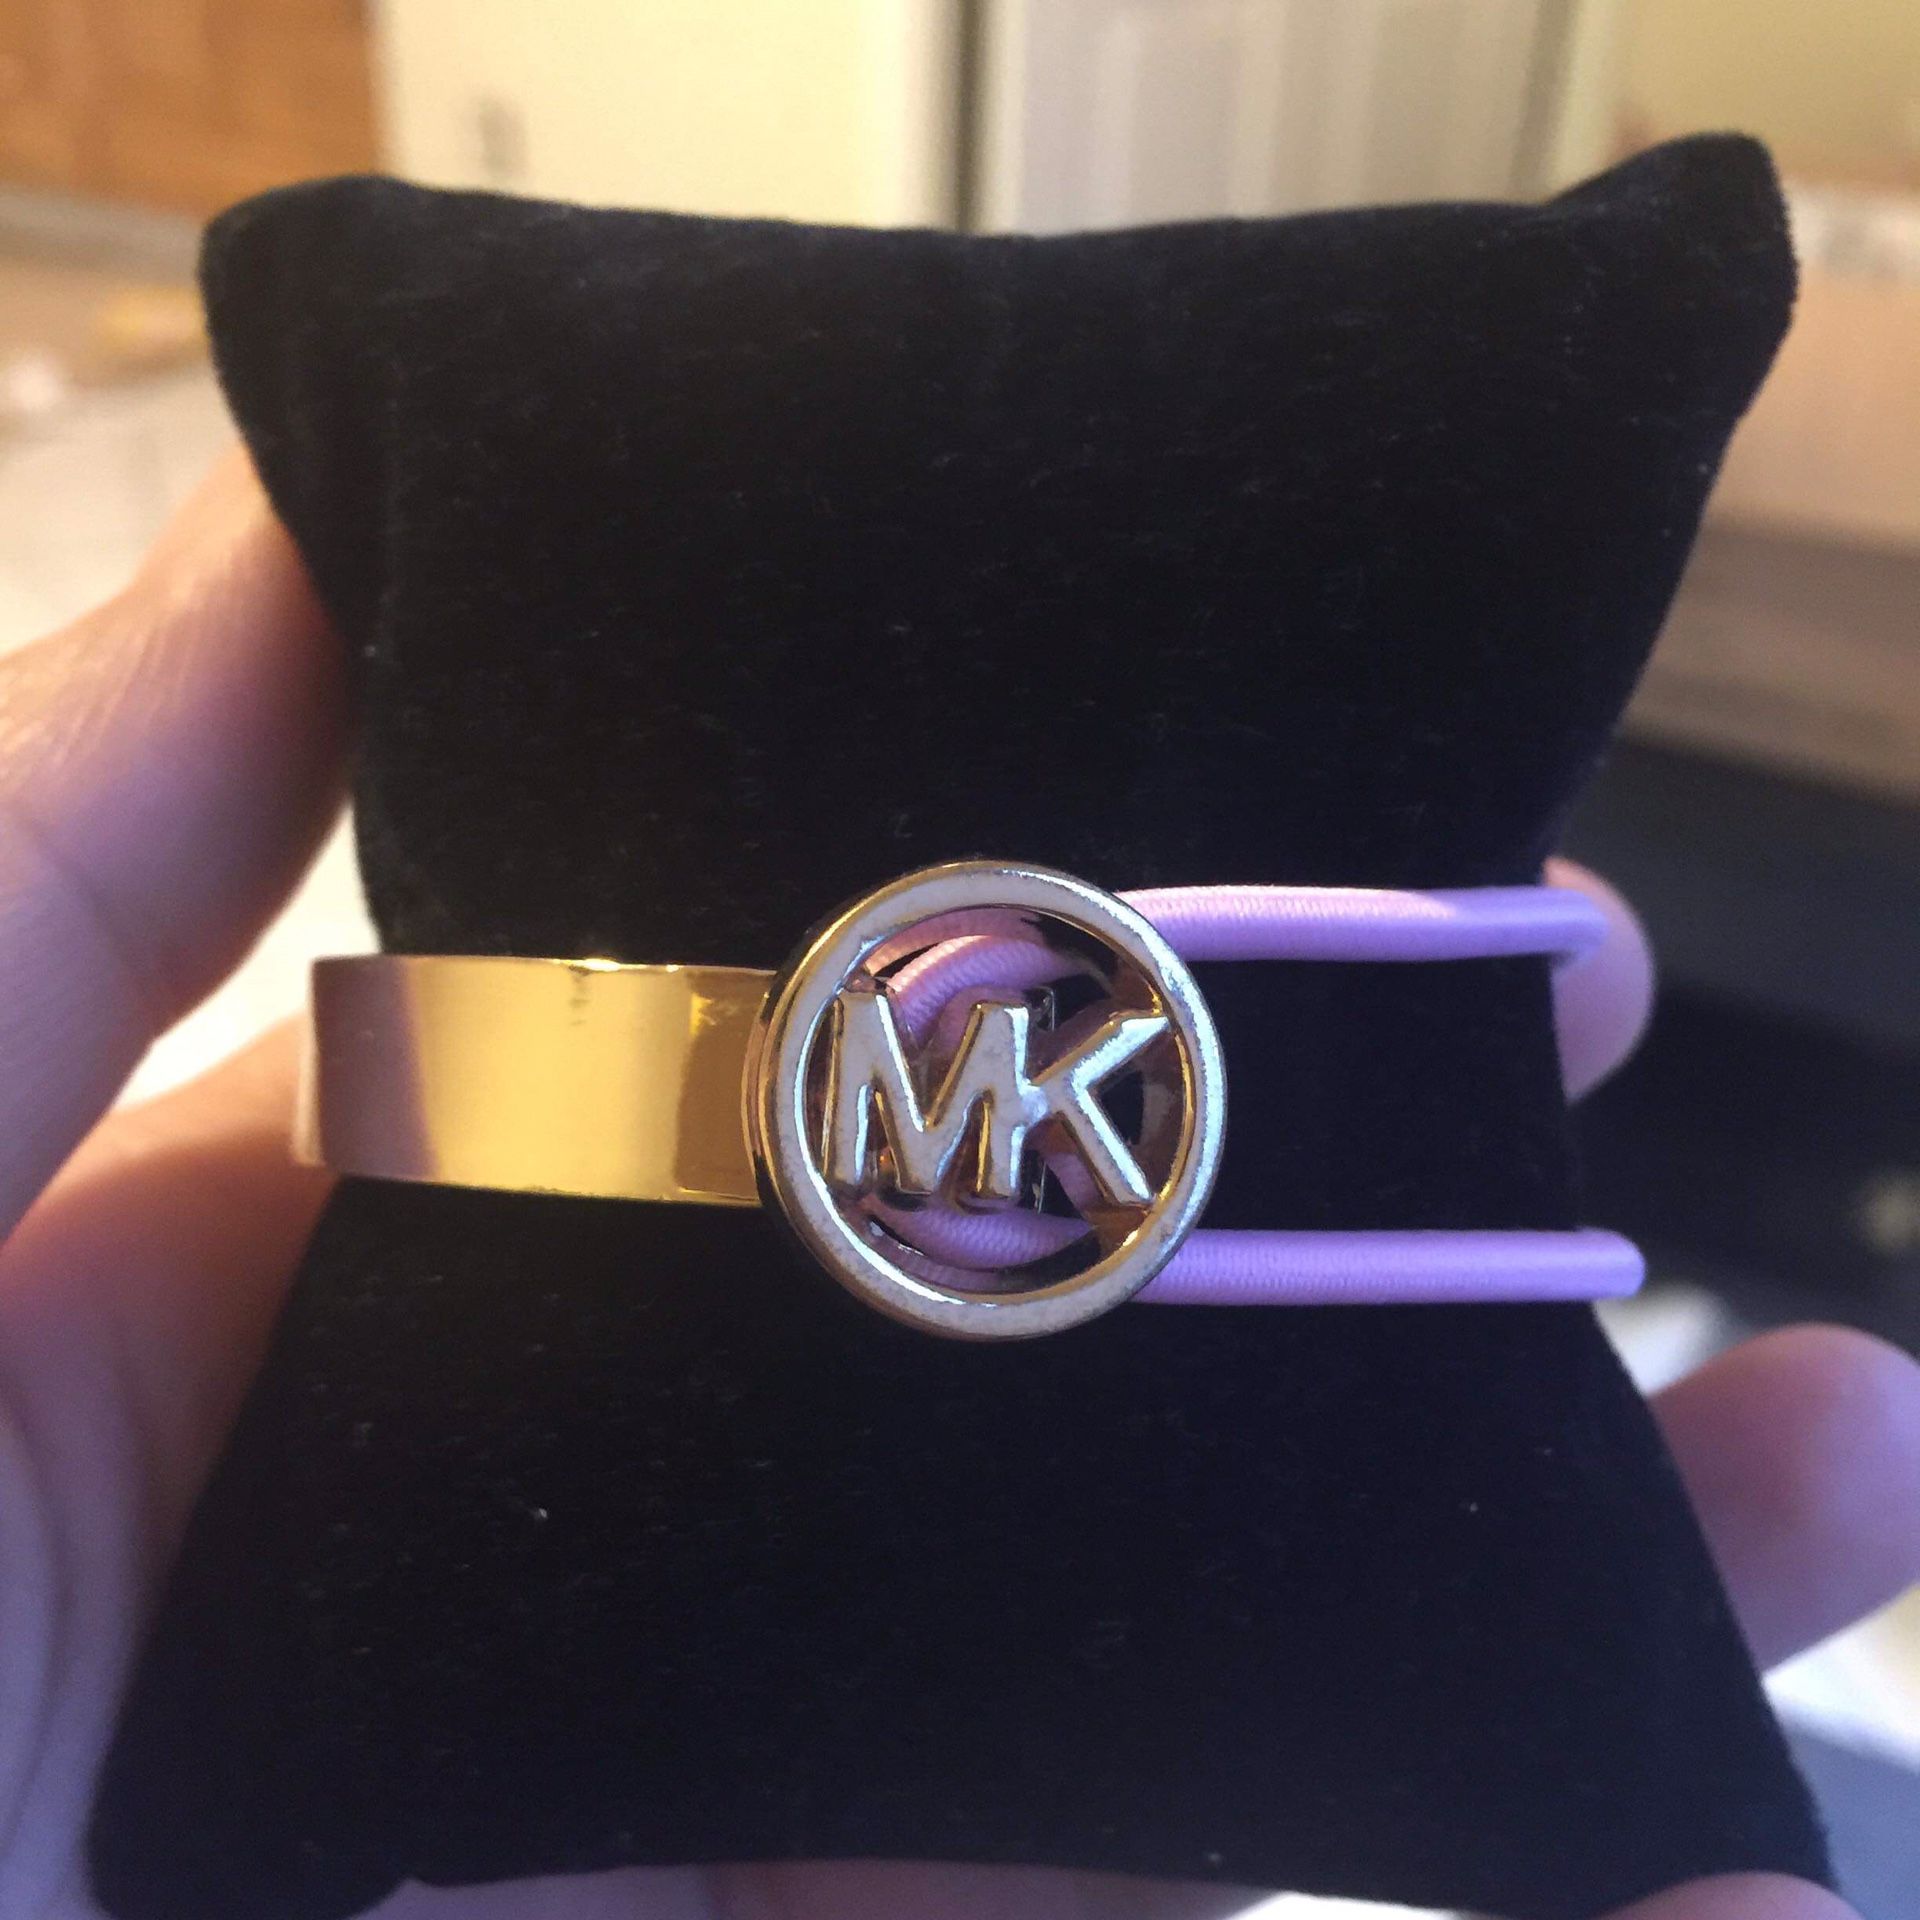 Mk Michael kors stretchable bracelet